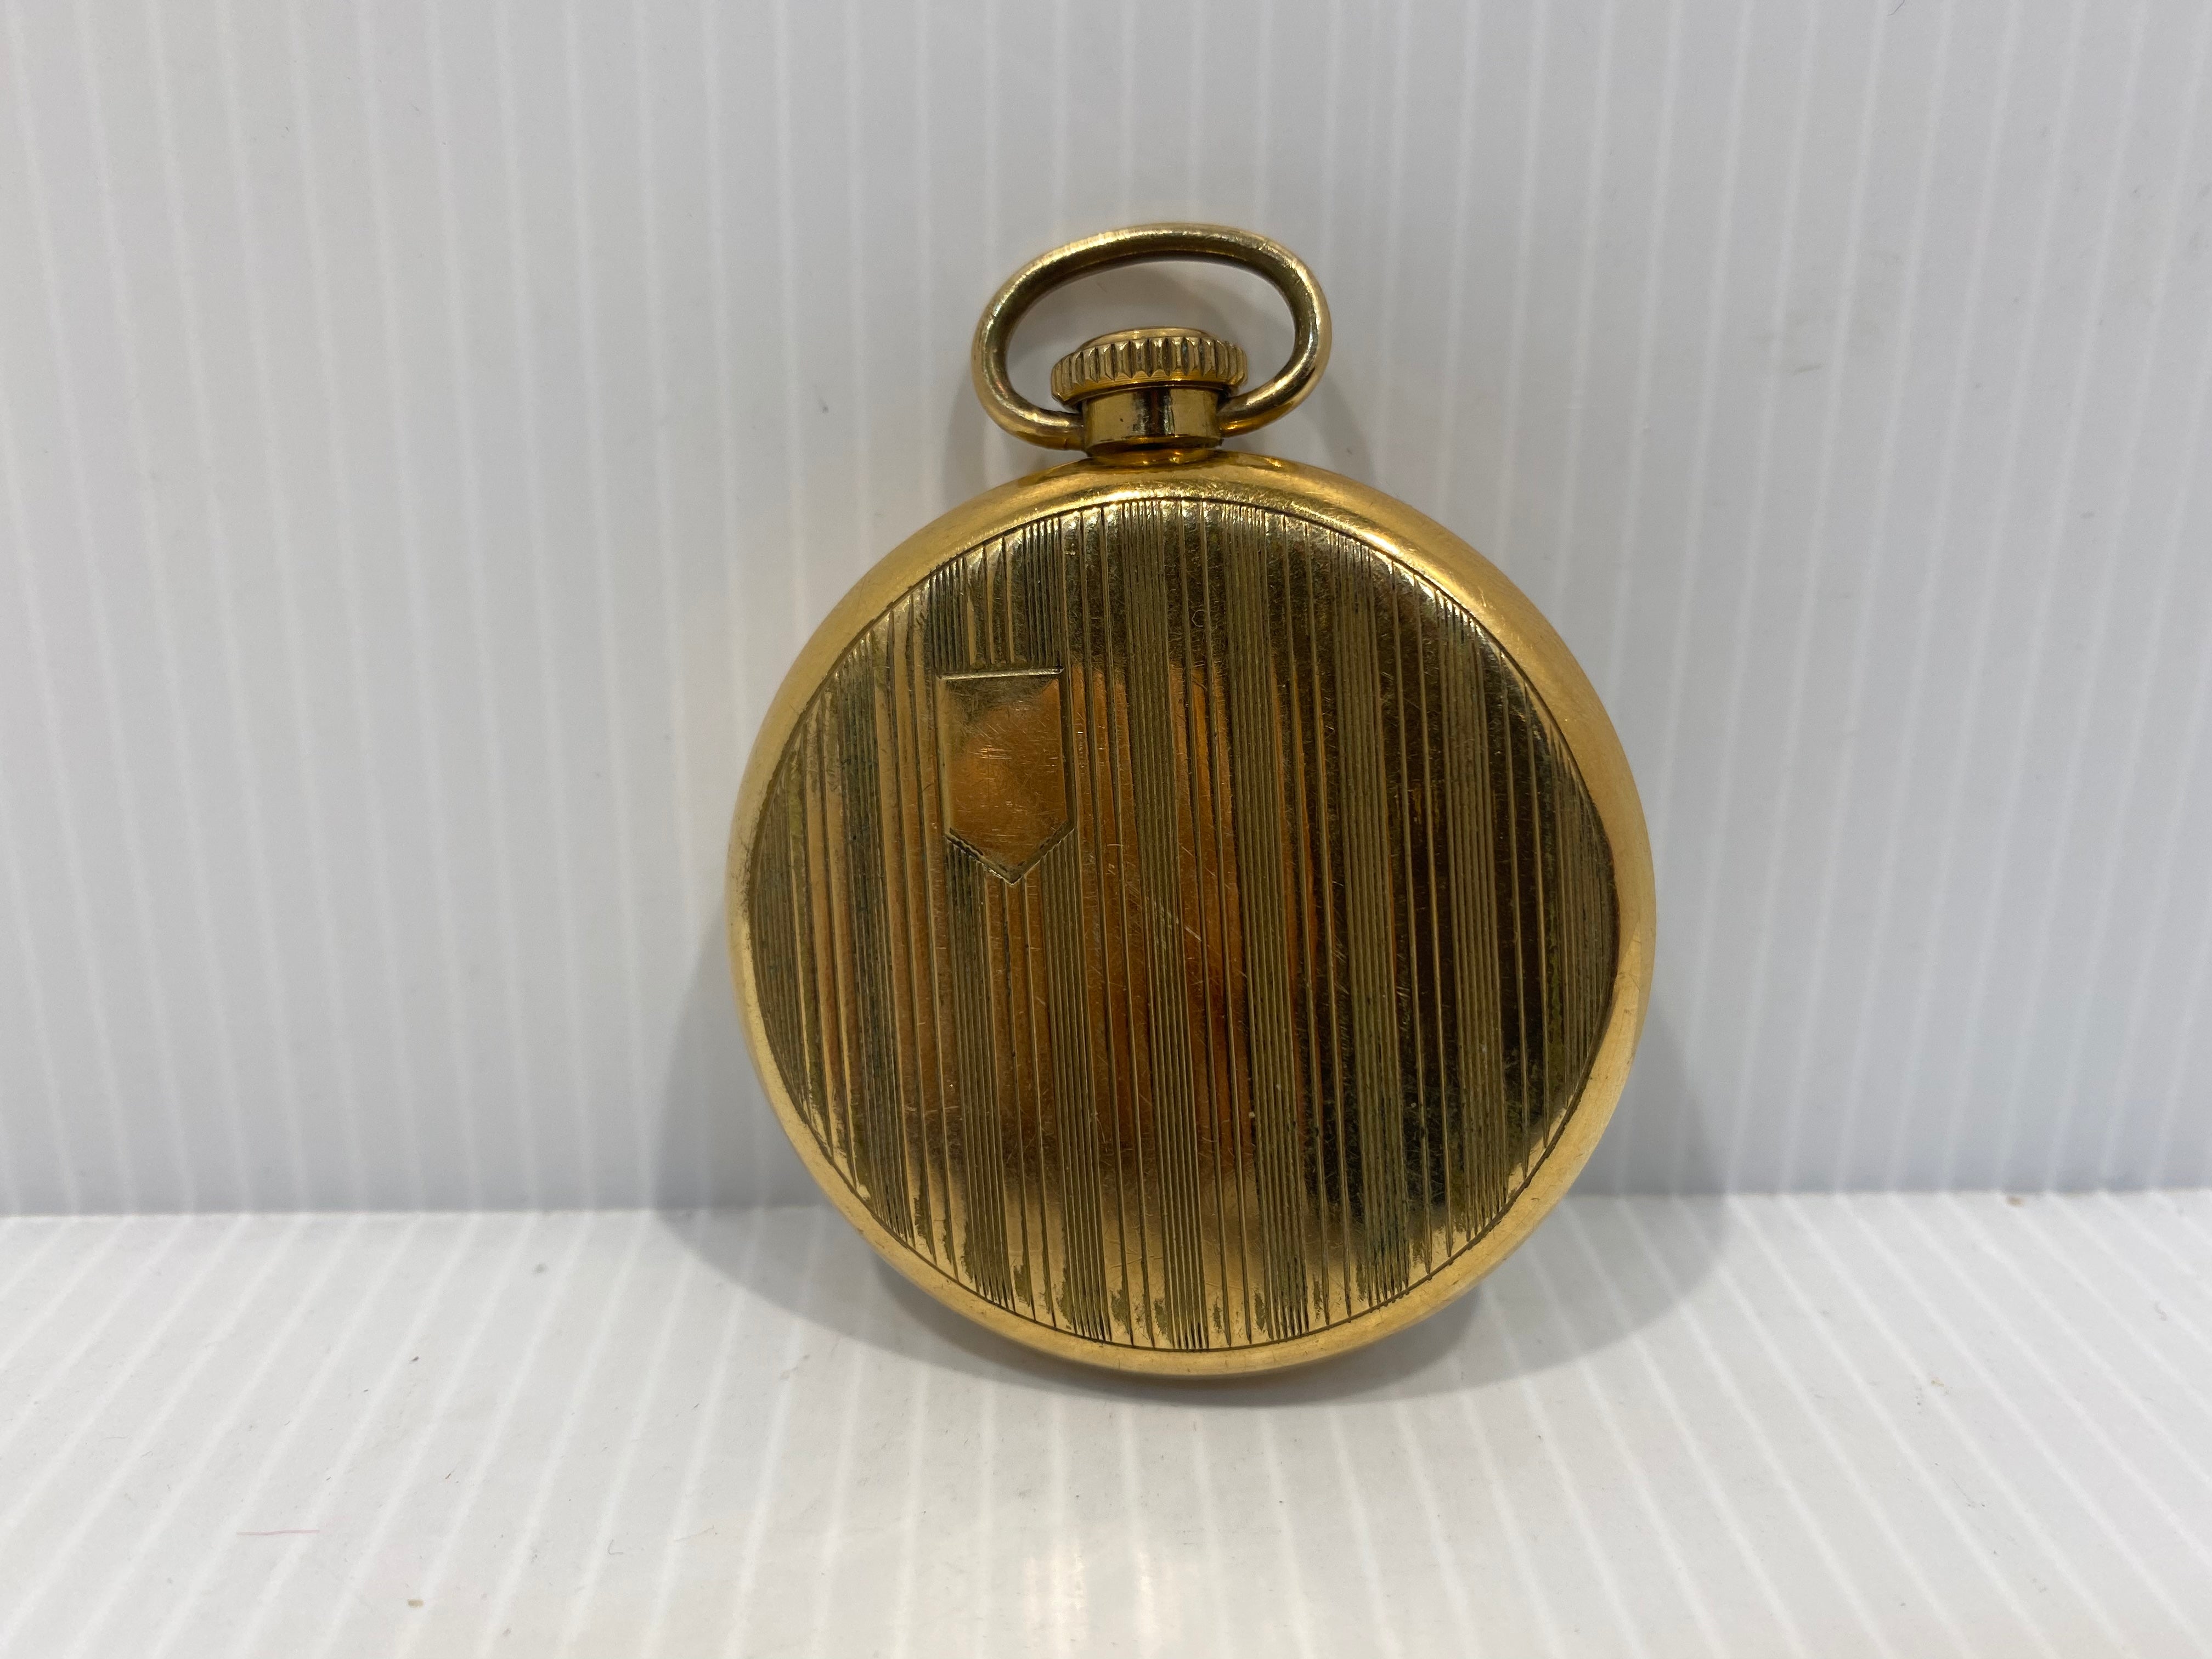 1922 New Haven pocket watch